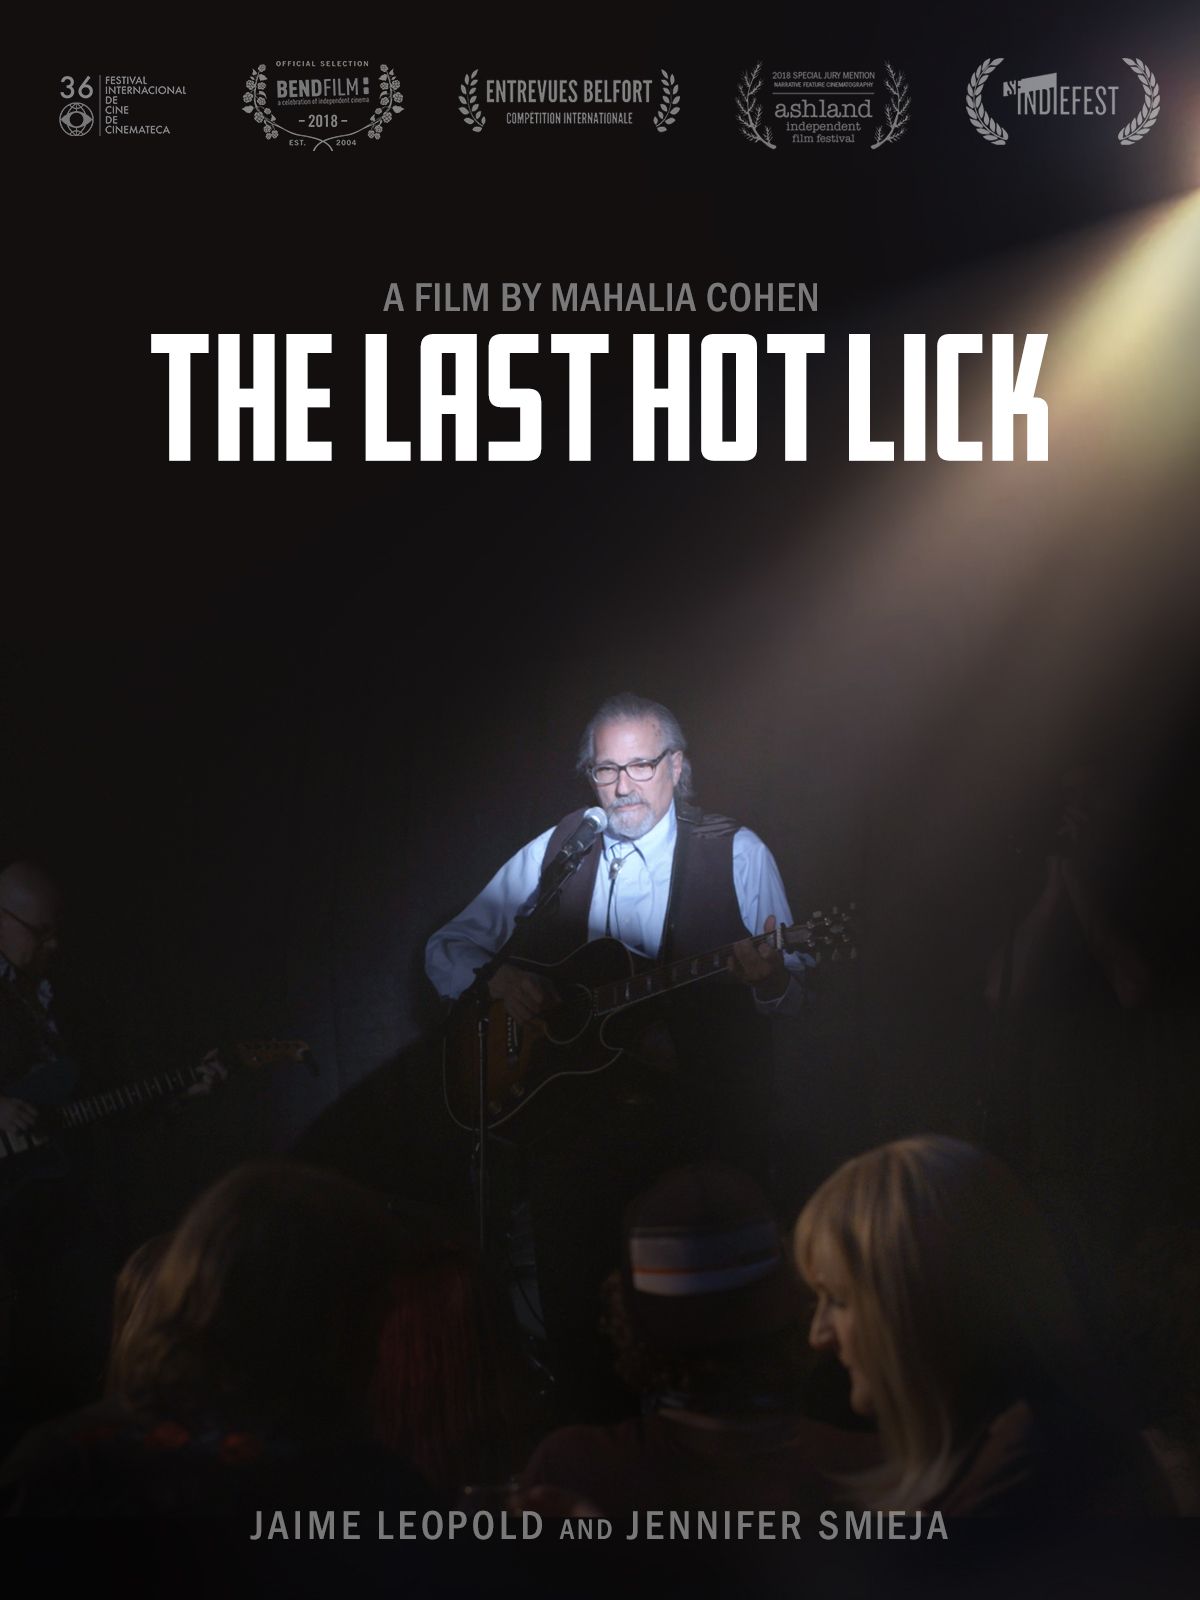 The Last Hot Lick Image